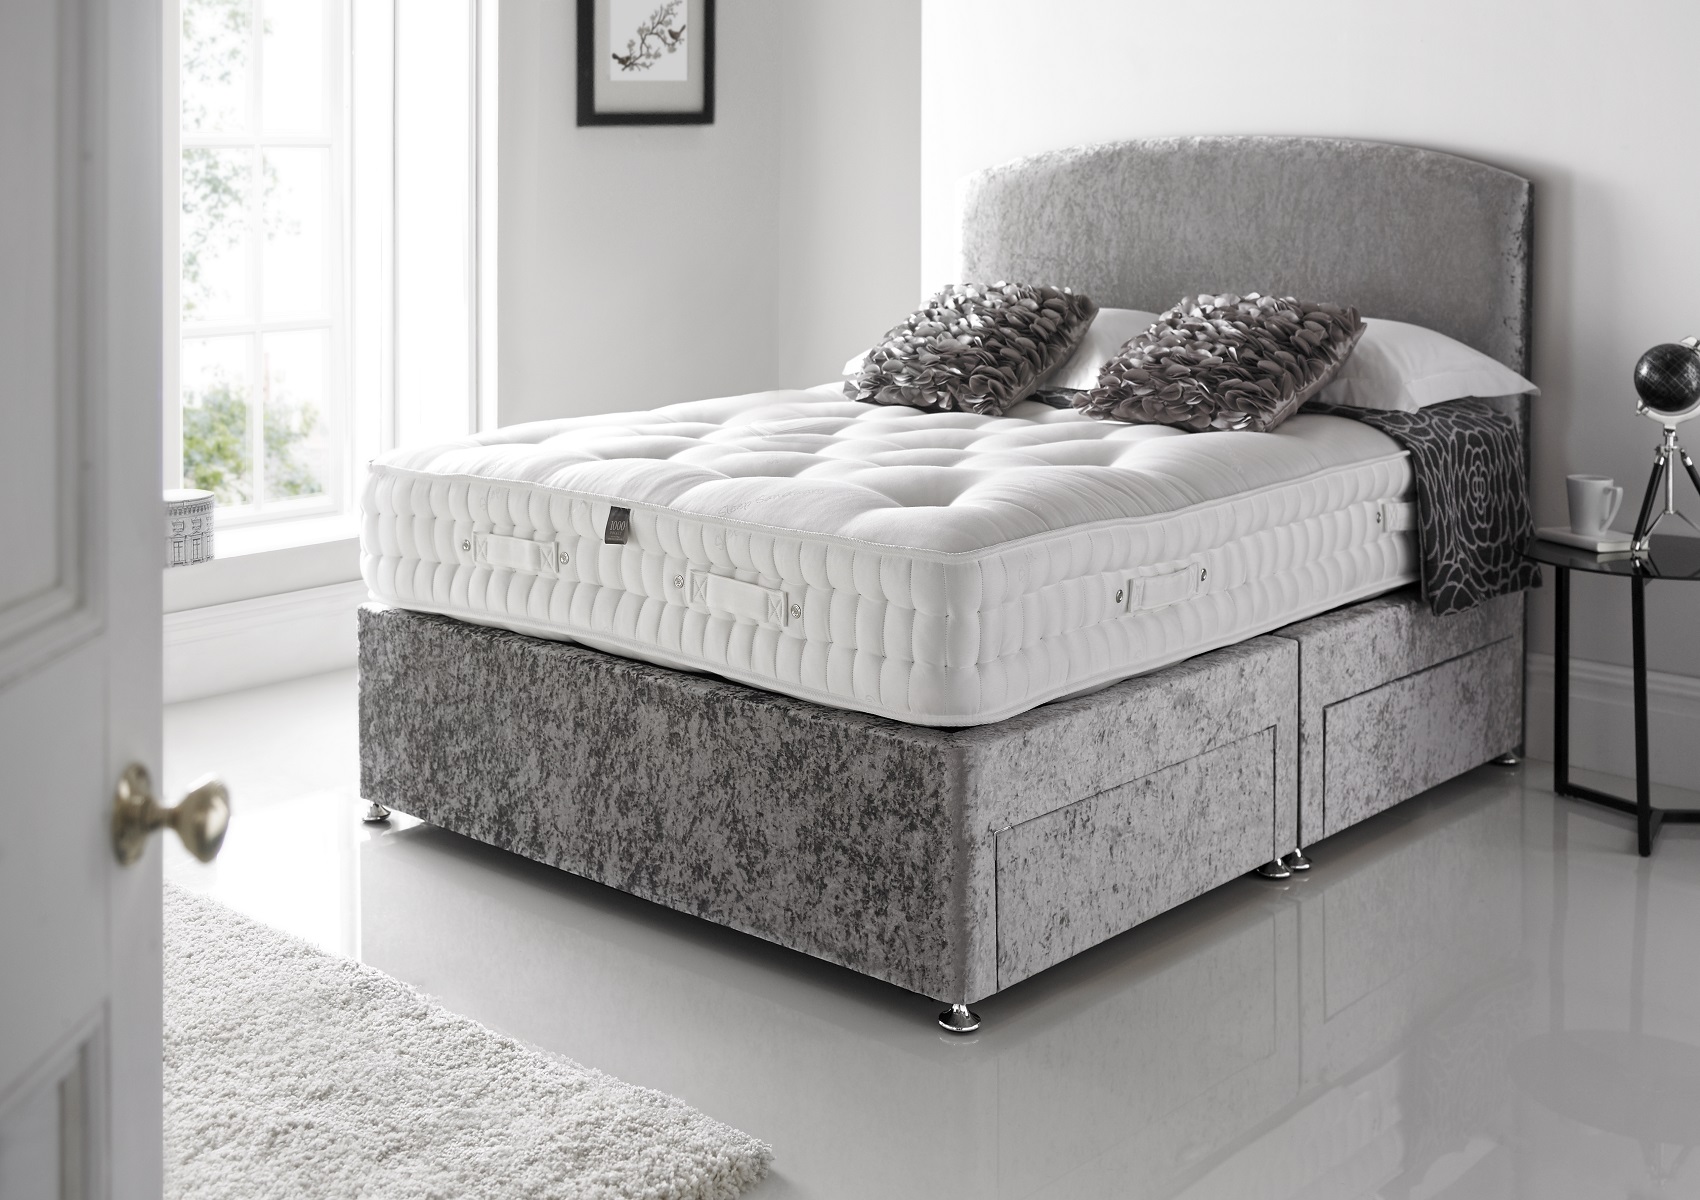 View Elite Charcoal Upholstered Super King Divan Bed Time4Sleep information